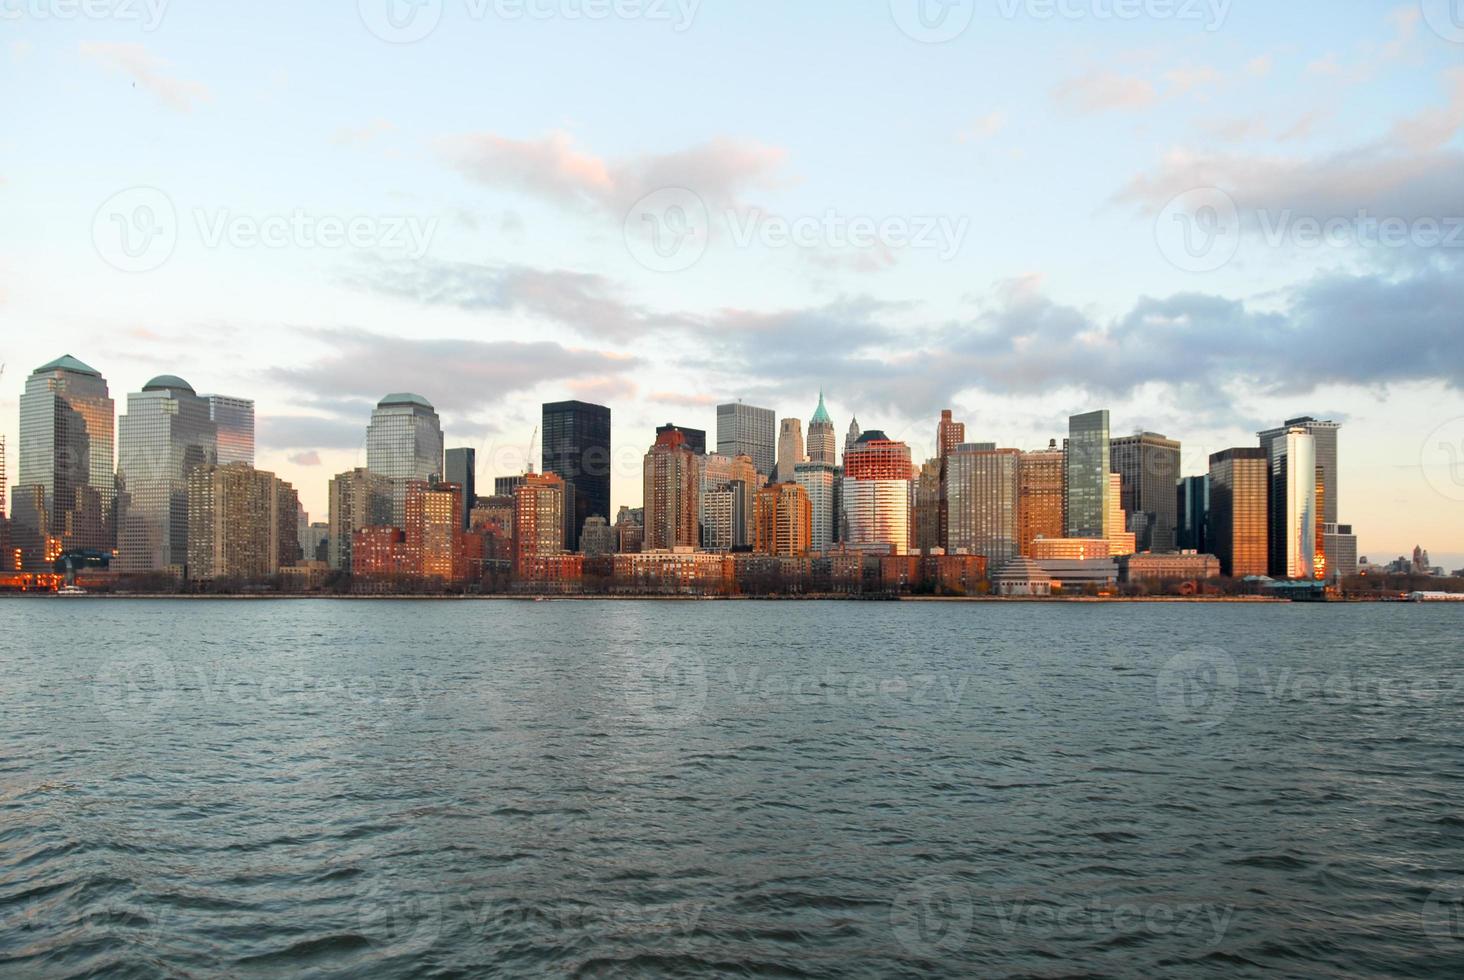 Lower Manhattan Skyline from the Hudson River in New York City. photo